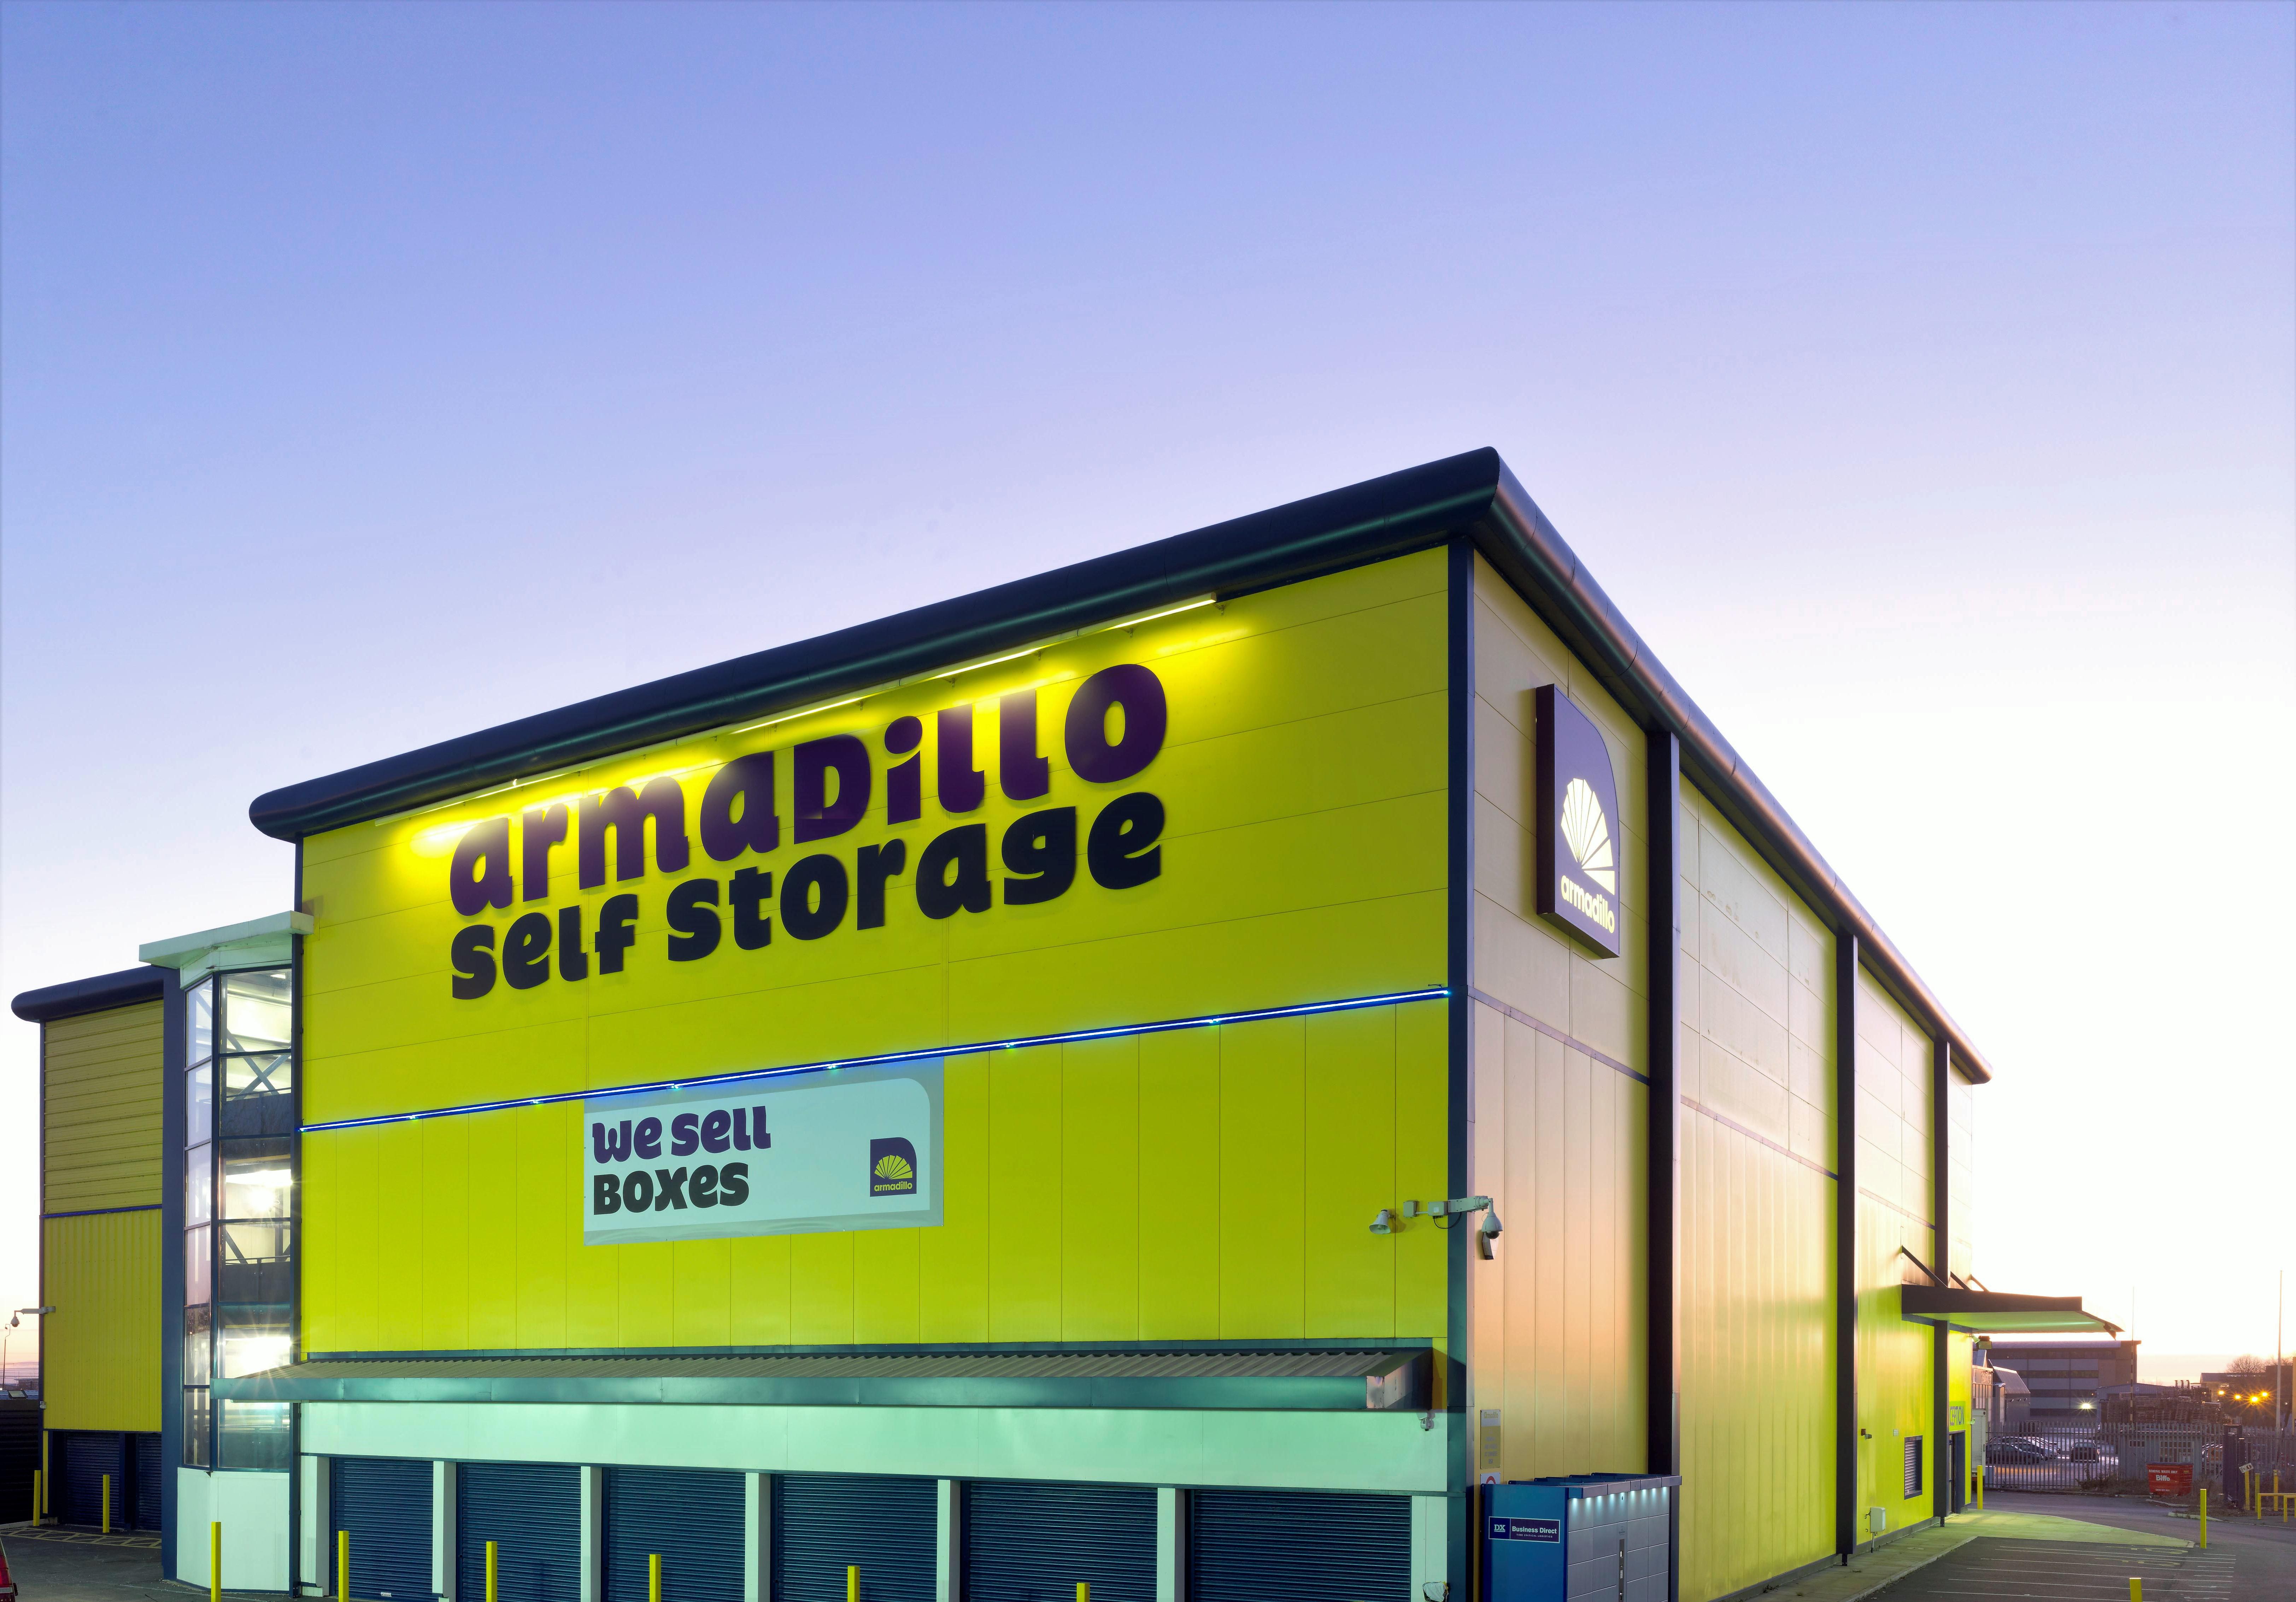 Armadillo Self Storage Liverpool South Liverpool 01514 863364